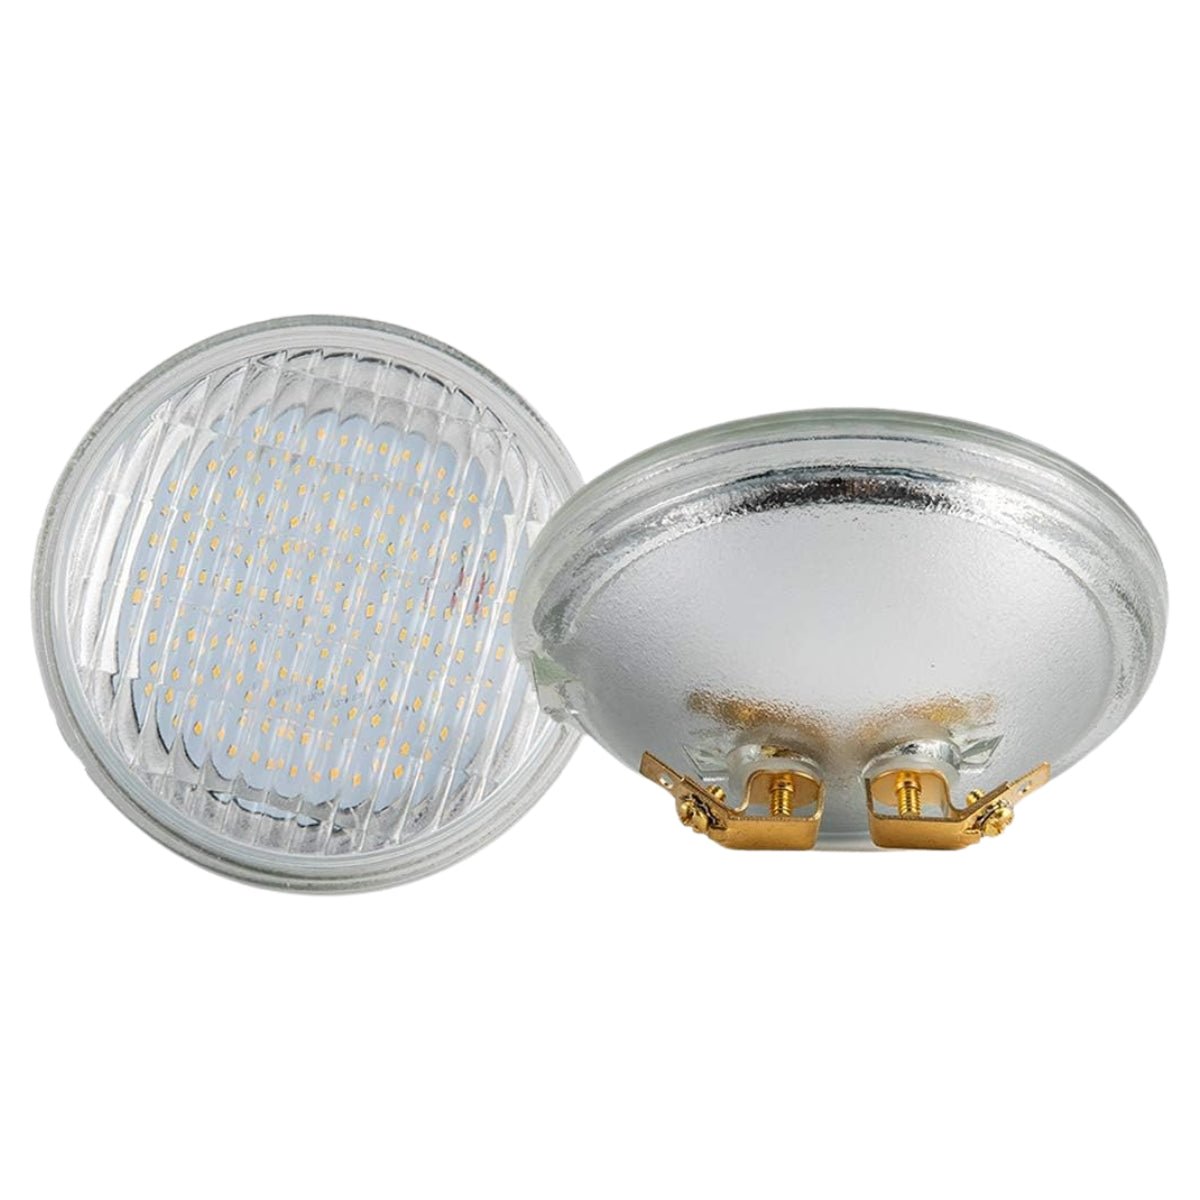 Lumina Lighting® PAR36 6W LED Bulb | 6W Bi-Pin Landscape LED Light | 12V 3000K Warm White, 700 Lumens | (6-Pack)